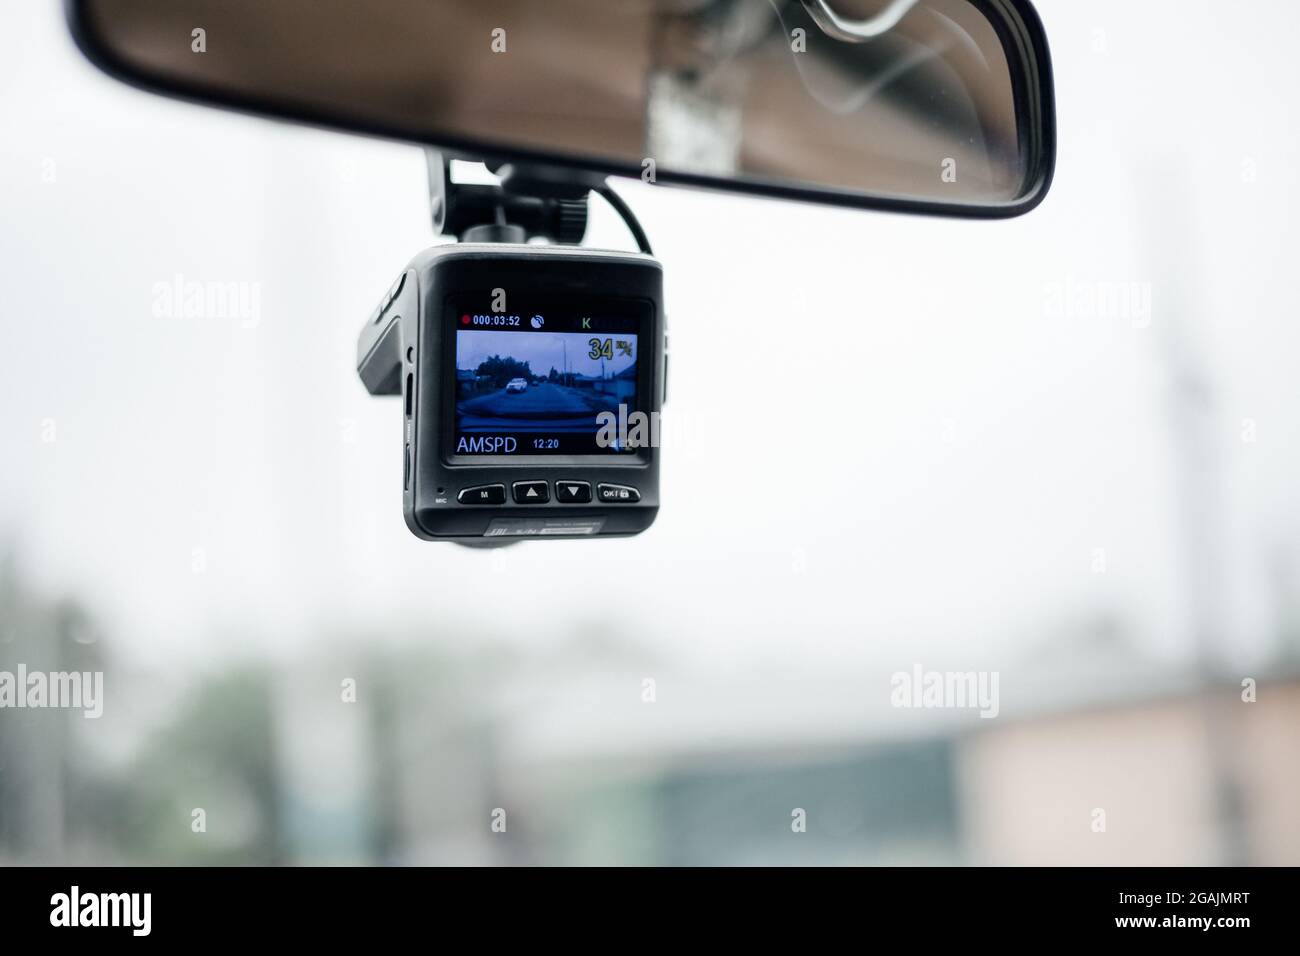 https://c8.alamy.com/comp/2GAJMRT/car-video-recorder-car-dash-camera-video-recorder-under-view-mirror-in-car-soft-focus-2GAJMRT.jpg